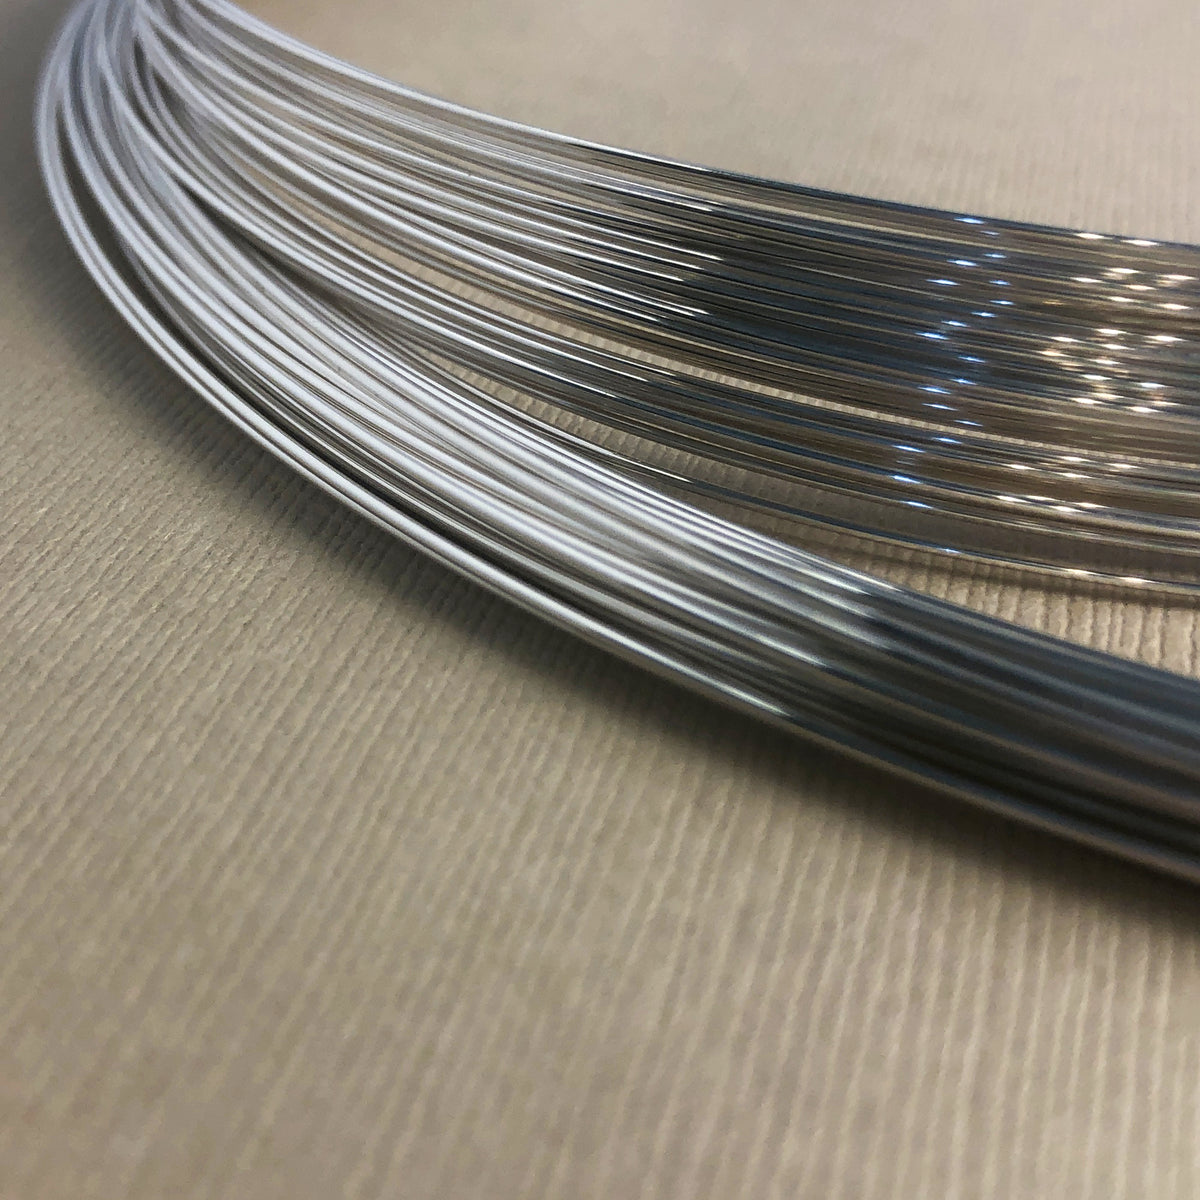 Sterling Silver Round Wire, Dead-Soft